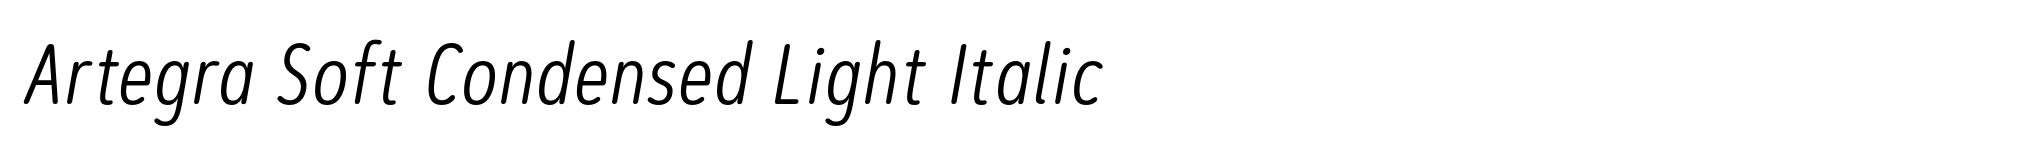 Artegra Soft Condensed Light Italic image